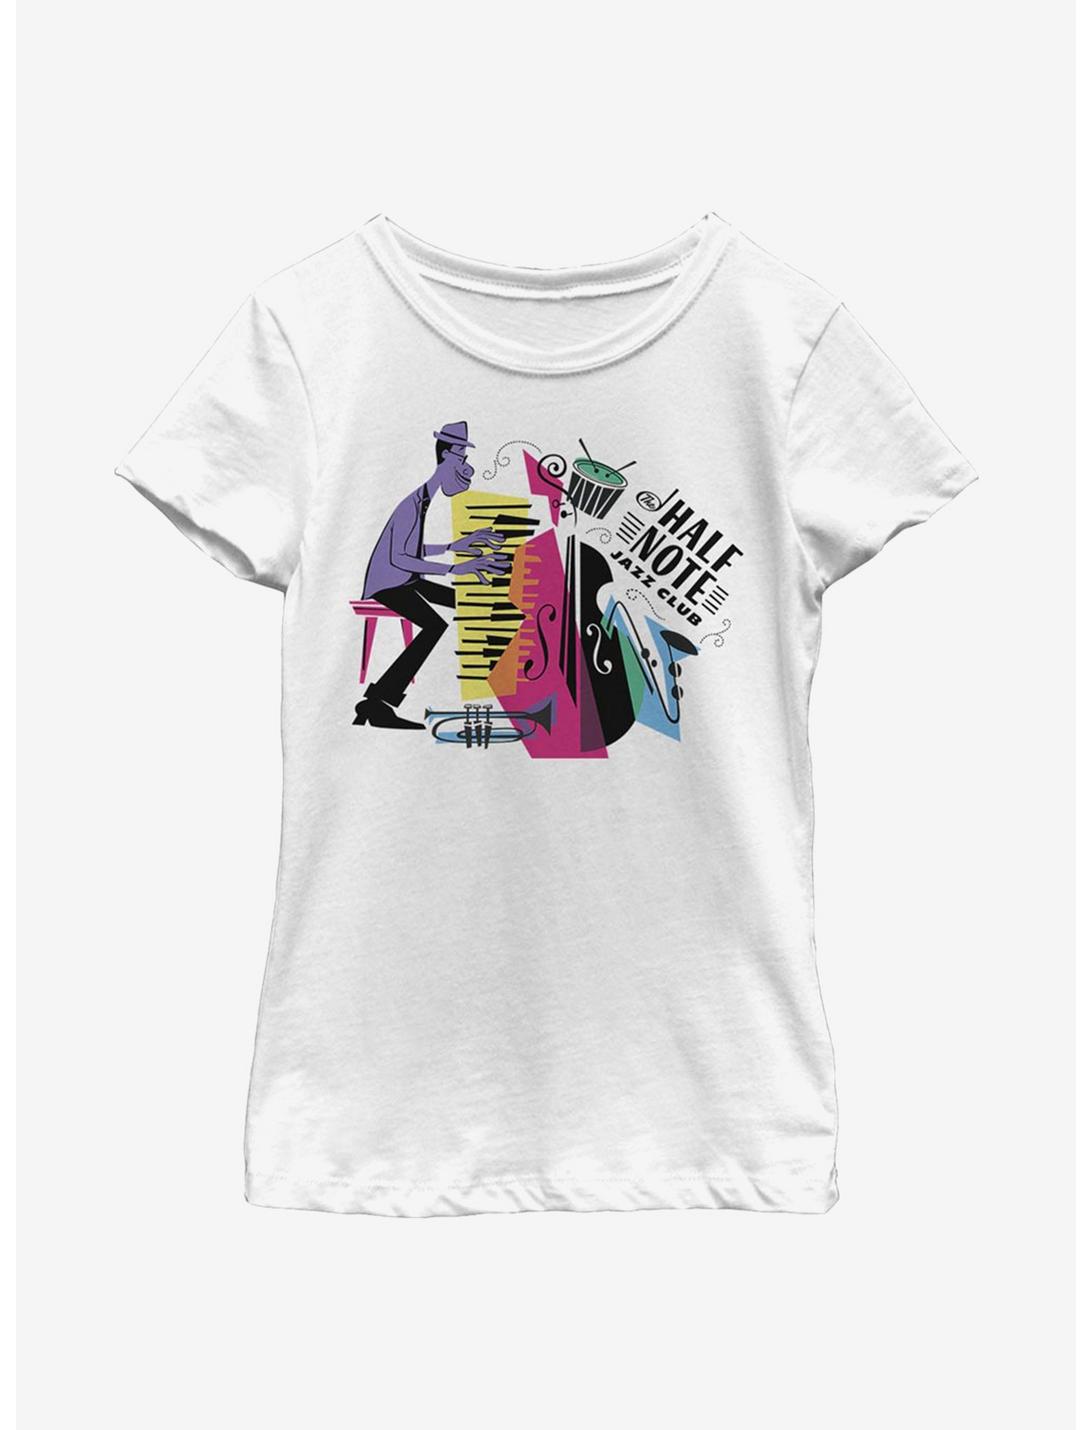 Disney Pixar Soul Half Note Jazz Club Badge Youth Girls T-Shirt, WHITE, hi-res